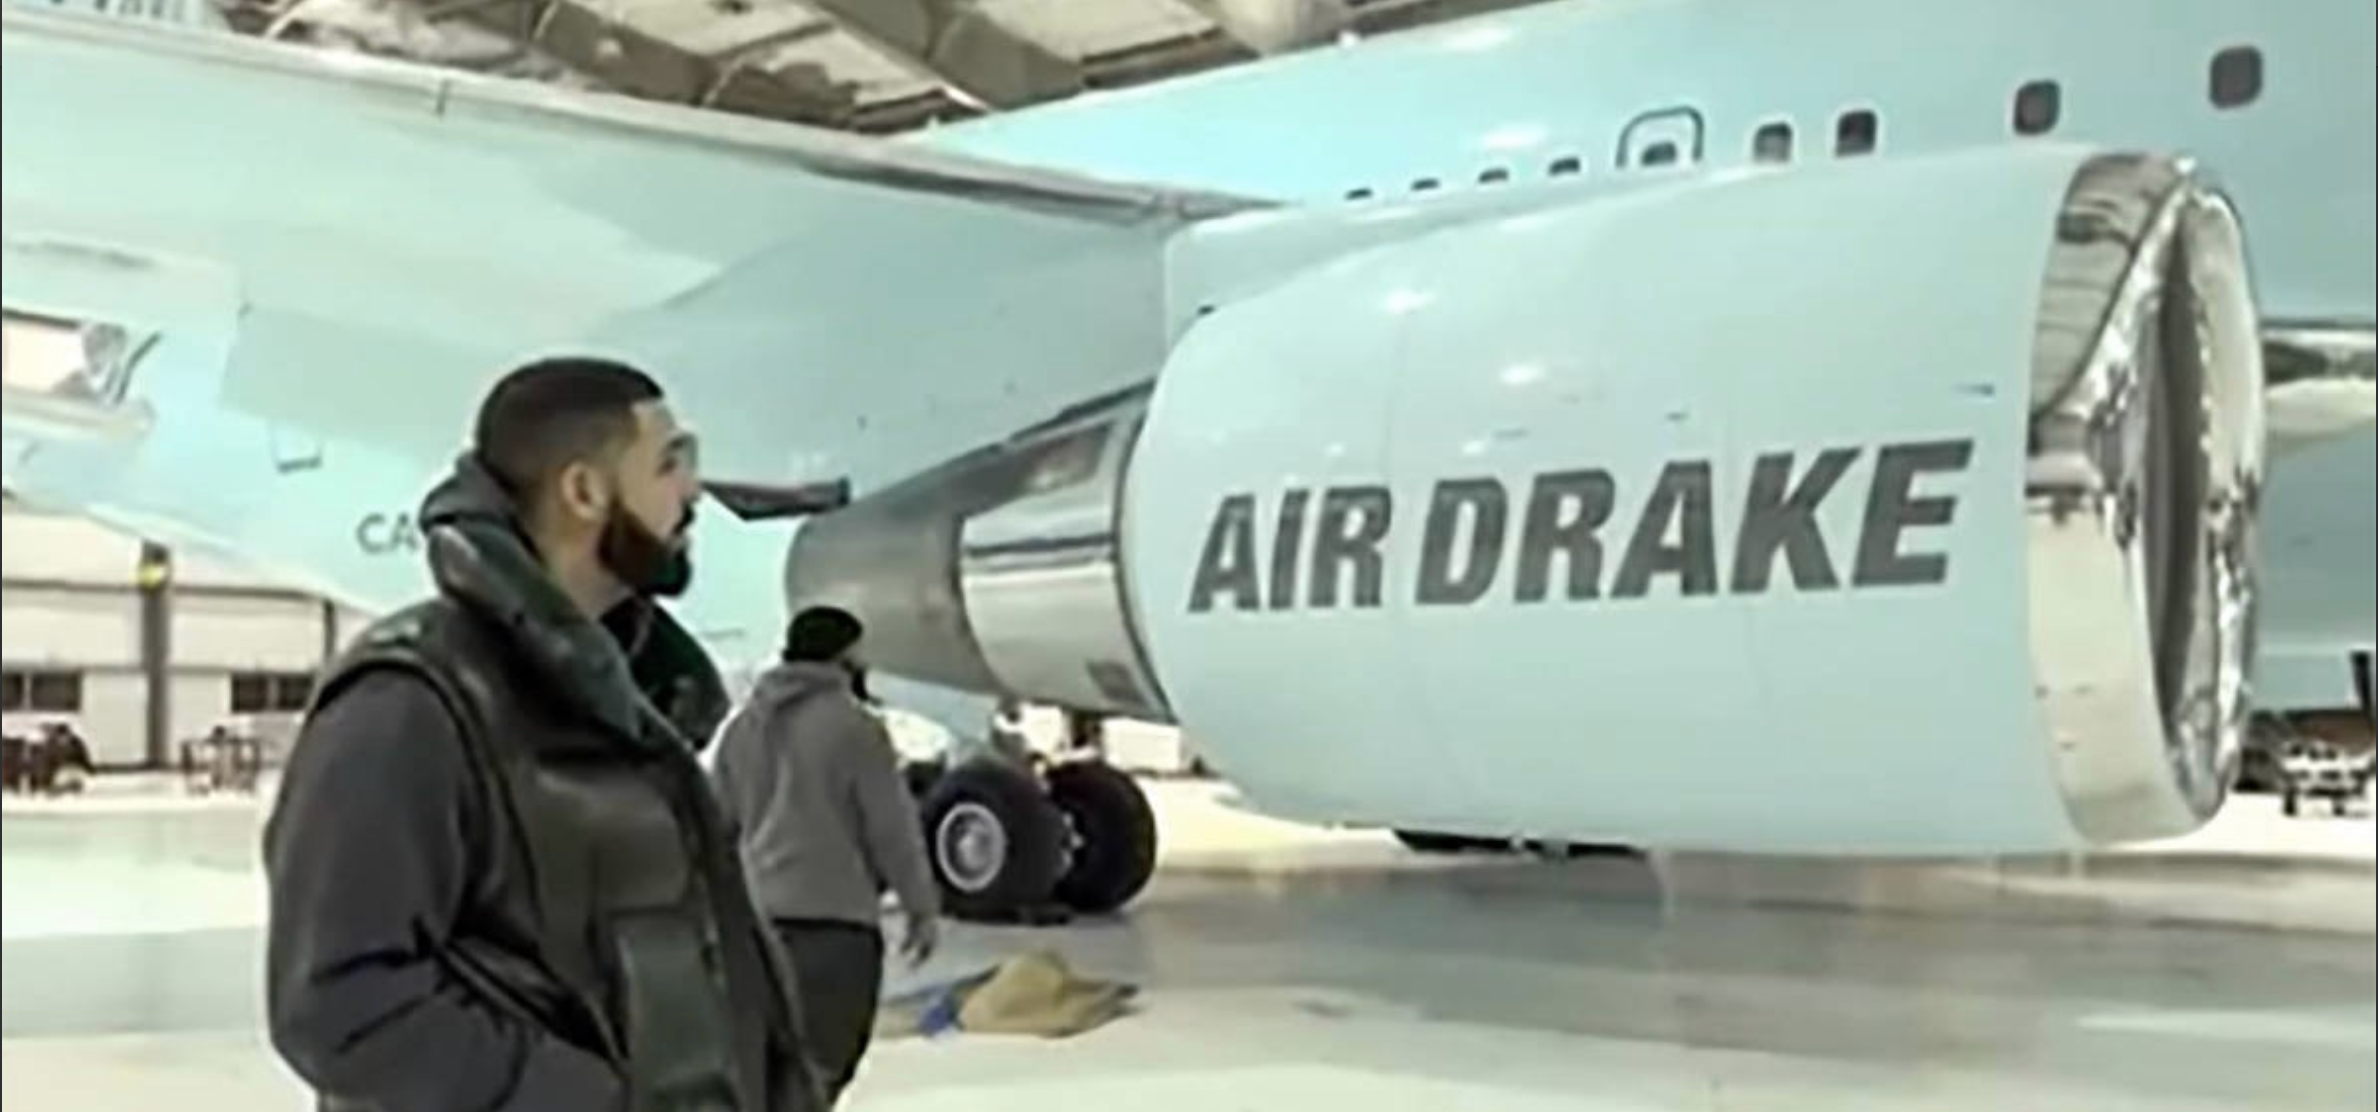 Air Drake